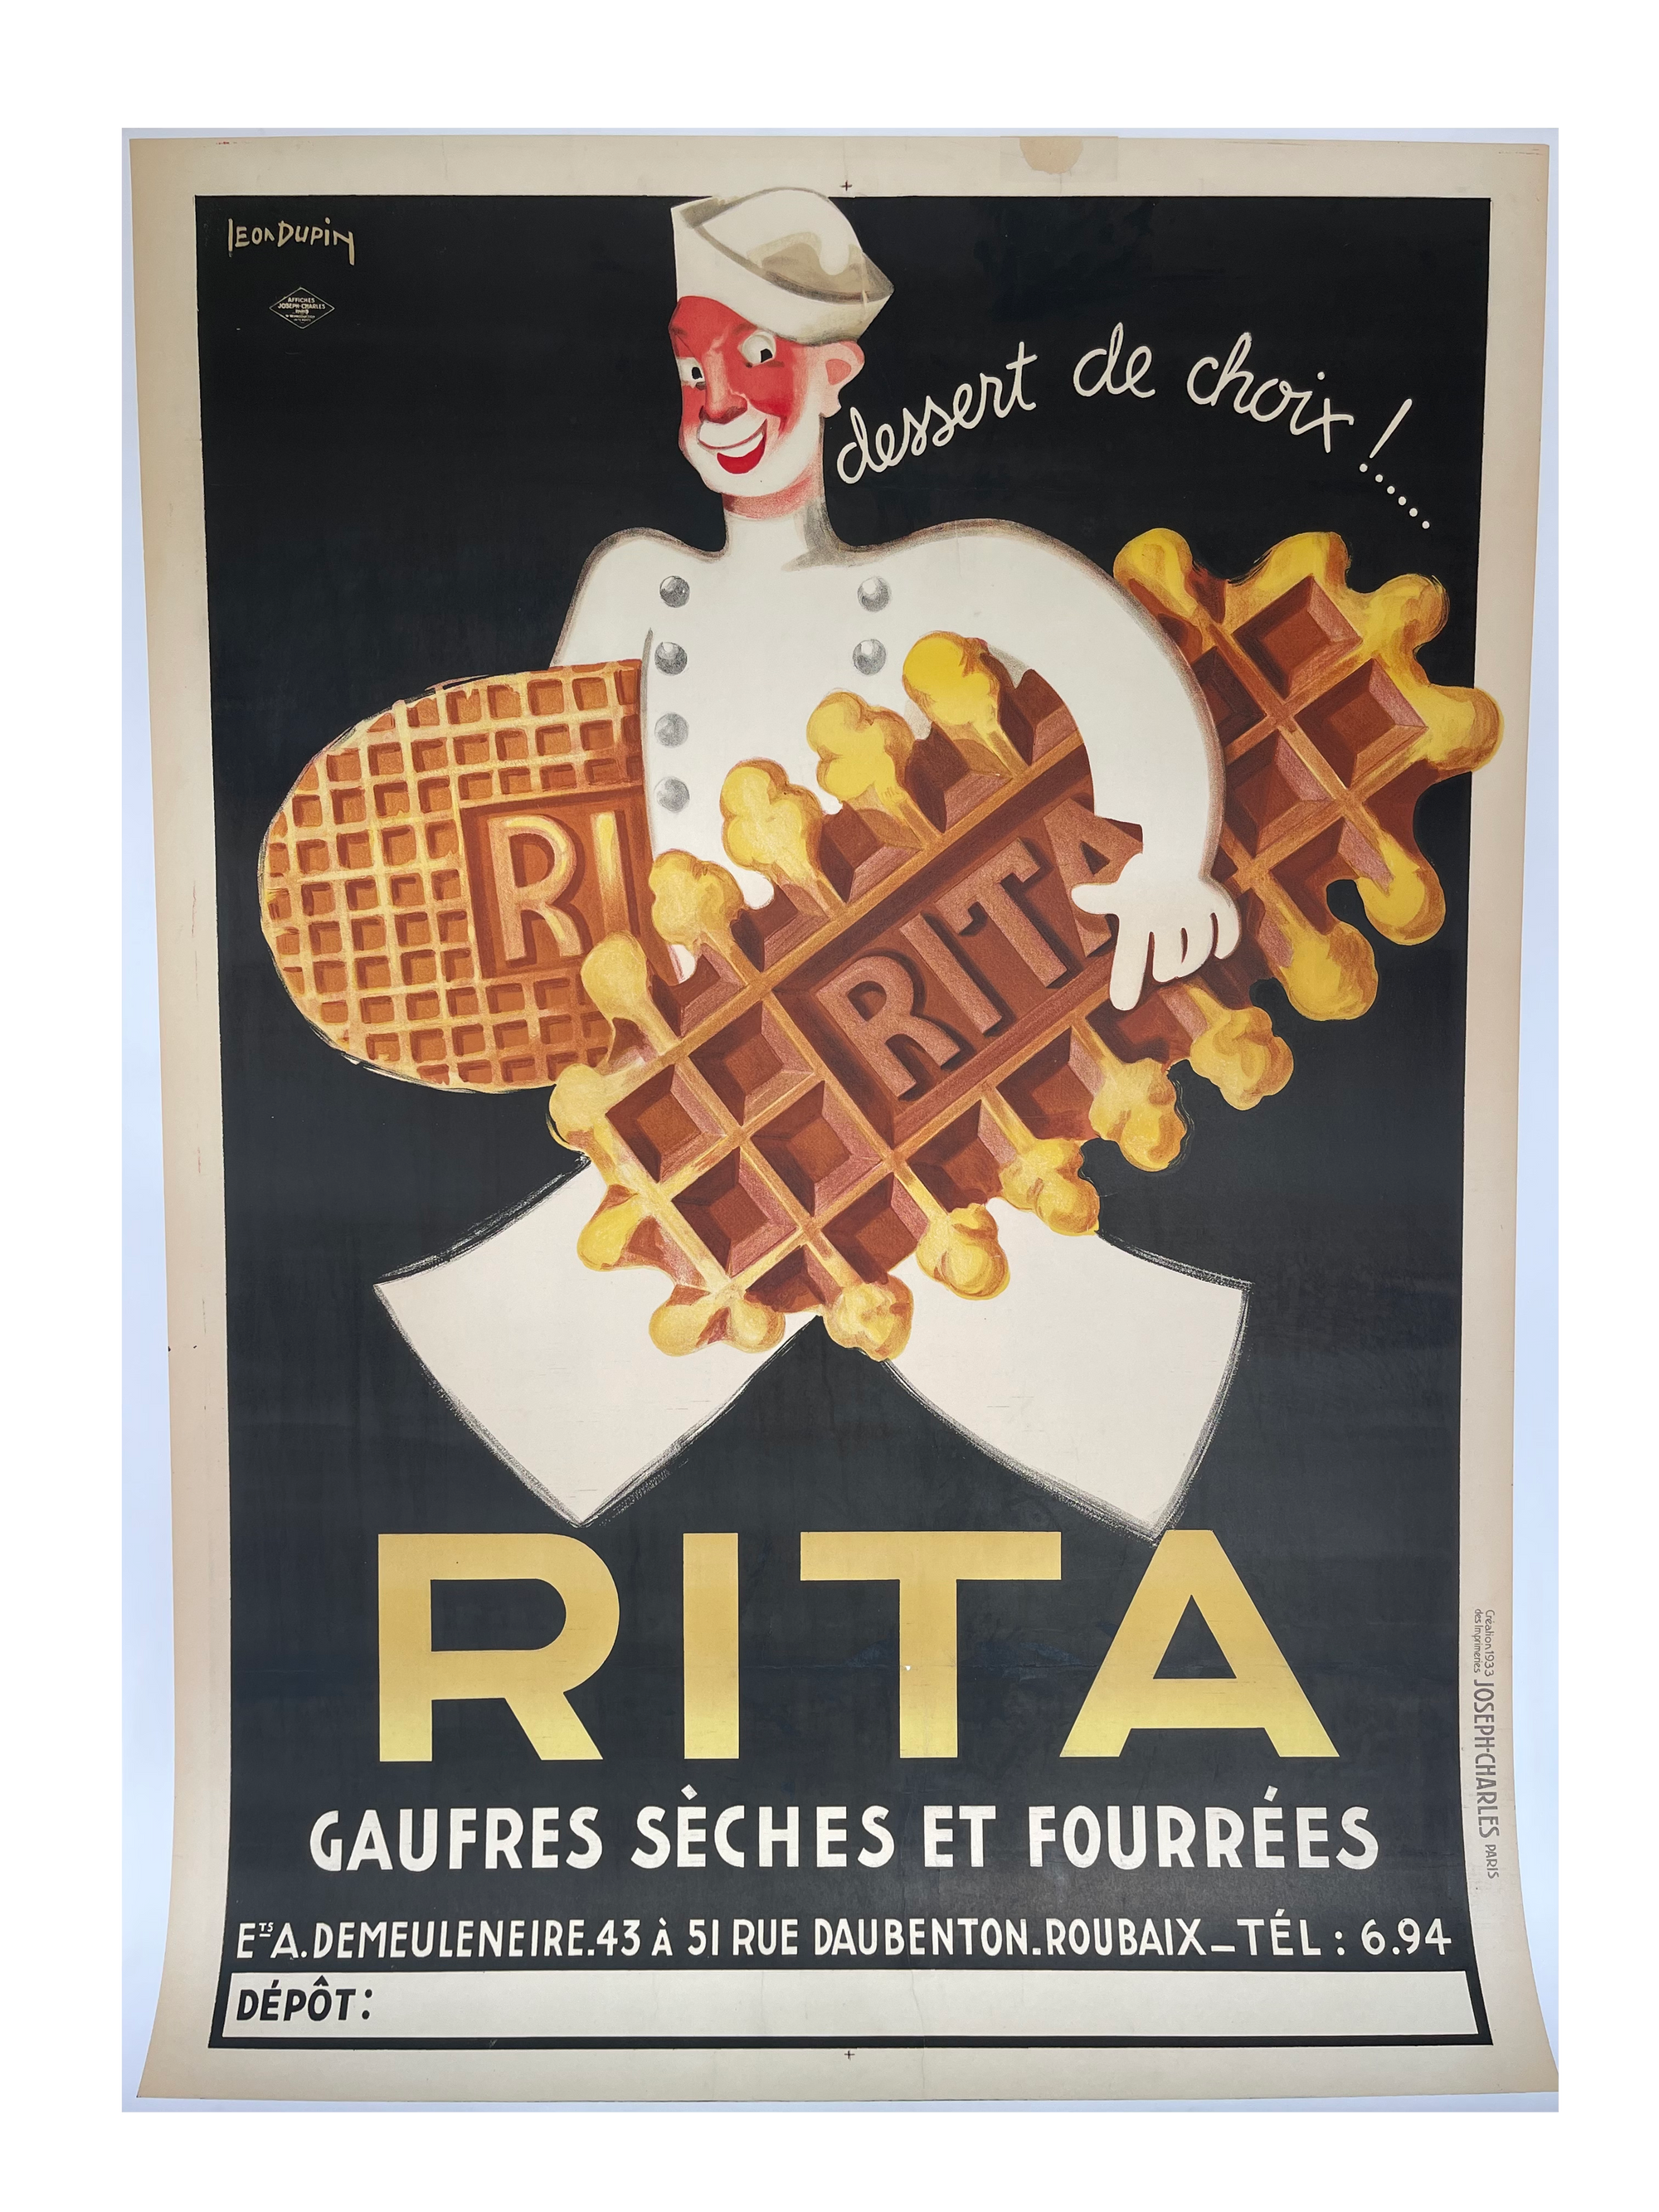 Rita Waffle by Leon Dupin